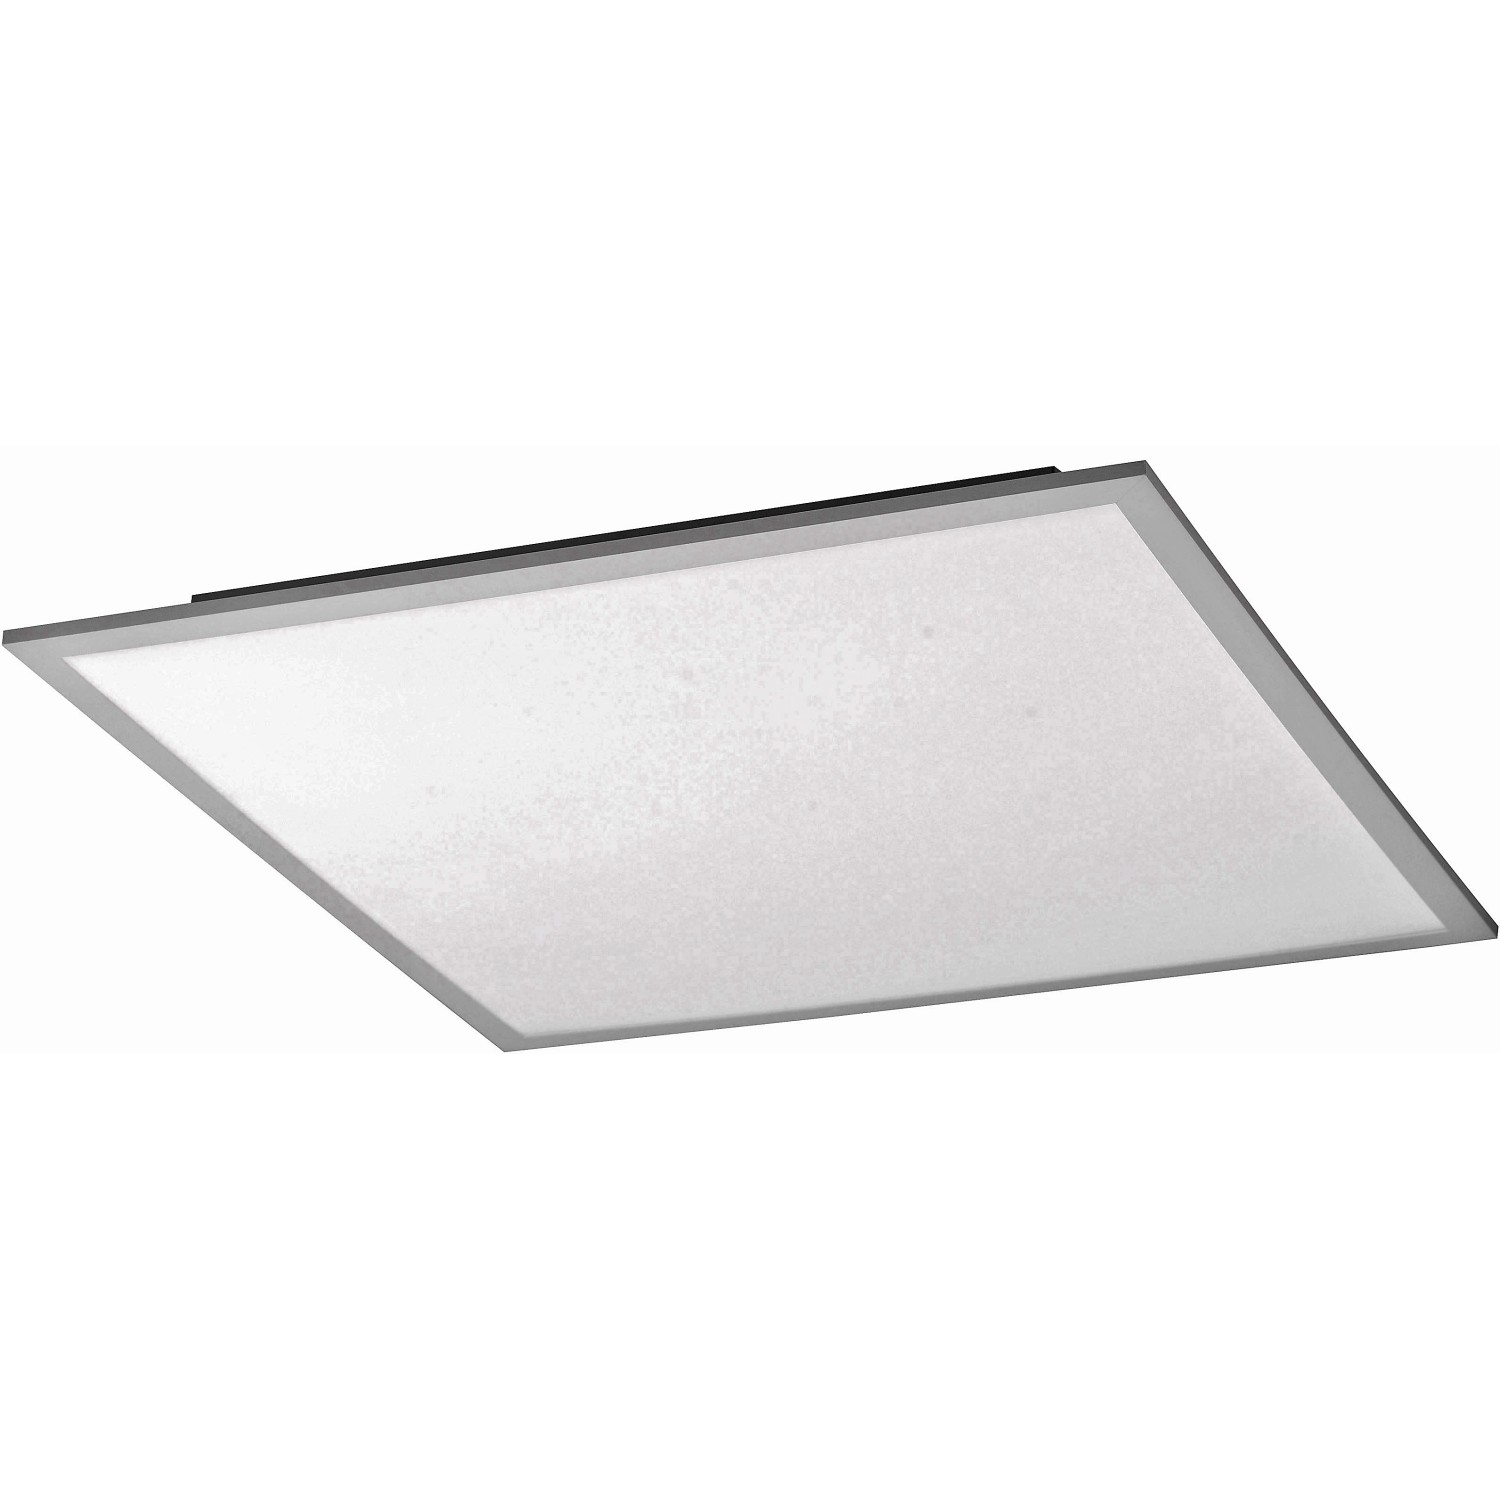 Image of LED-Panel 45x45cm, dimmbar, 4000K, ultraflaches Design